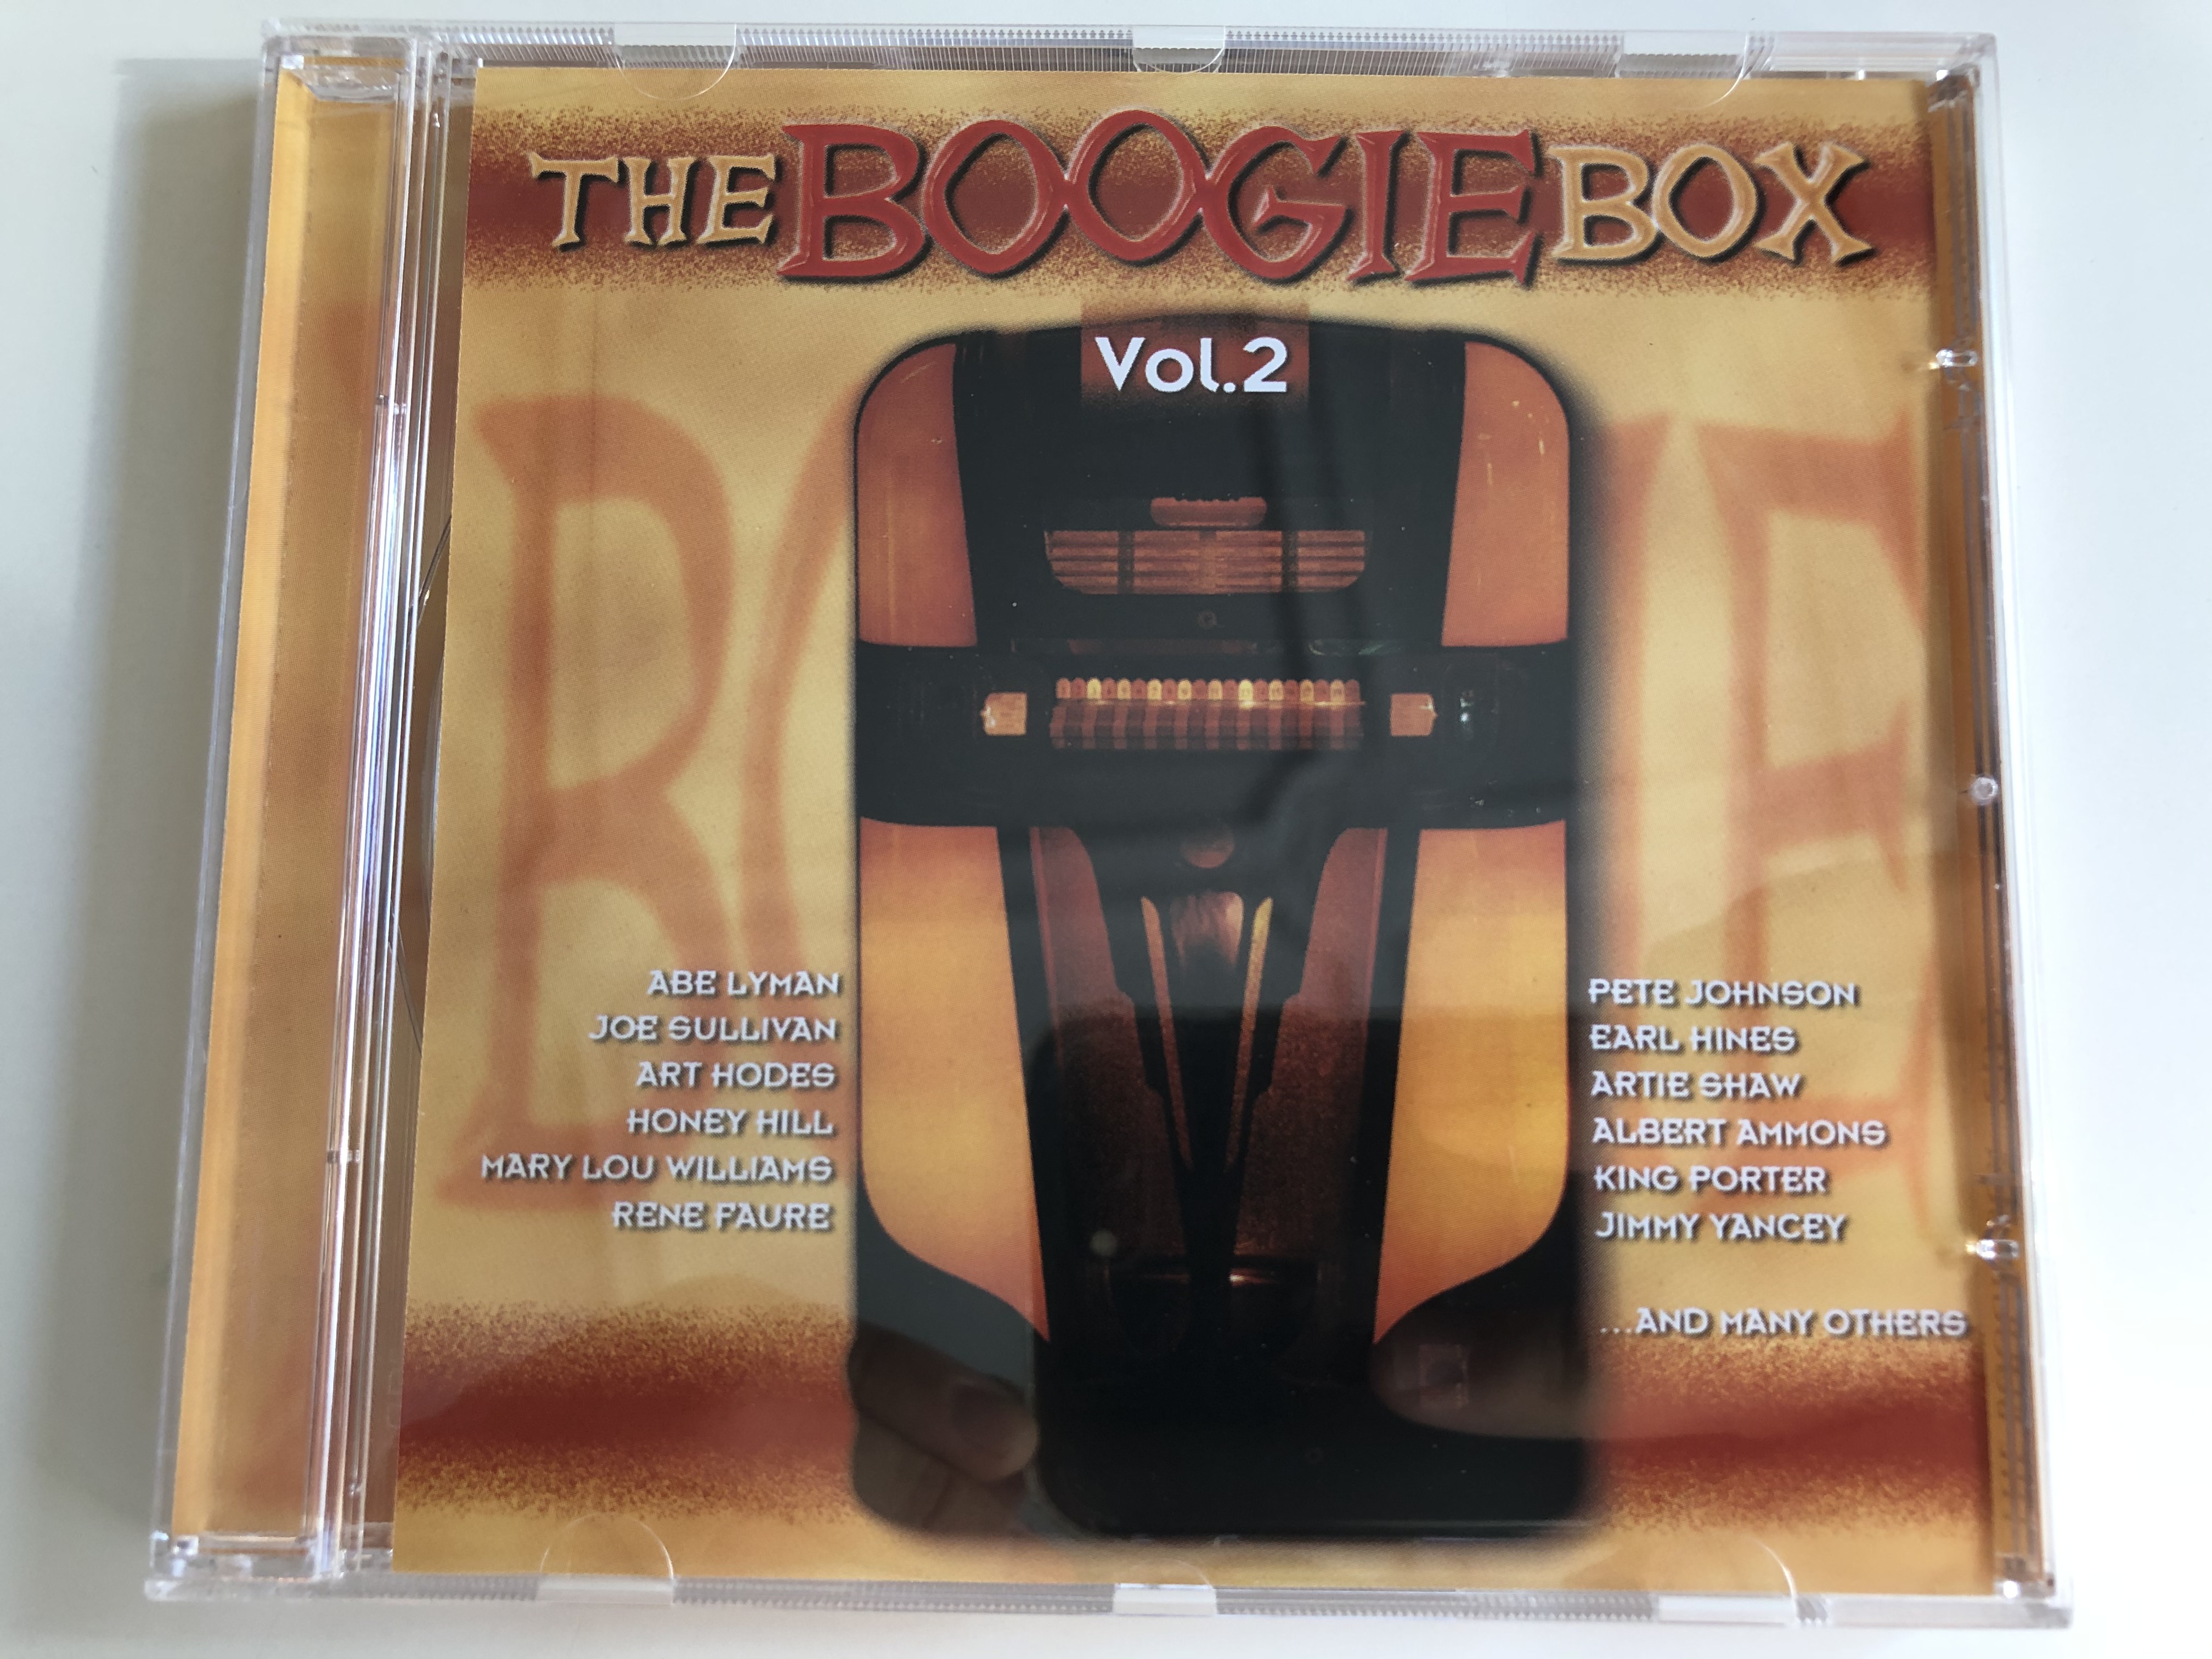 the-boogie-box-vol.-2-abe-lyman-joe-sullivan-art-hodes-honey-hill-mary-lou-williams-rene-faure-pete-johnson-earl-hines-artie-shaw-albert-ammons-king-porter-jimmy-yancey-and-many-more-tim-cz-audio-c-1-.jpg